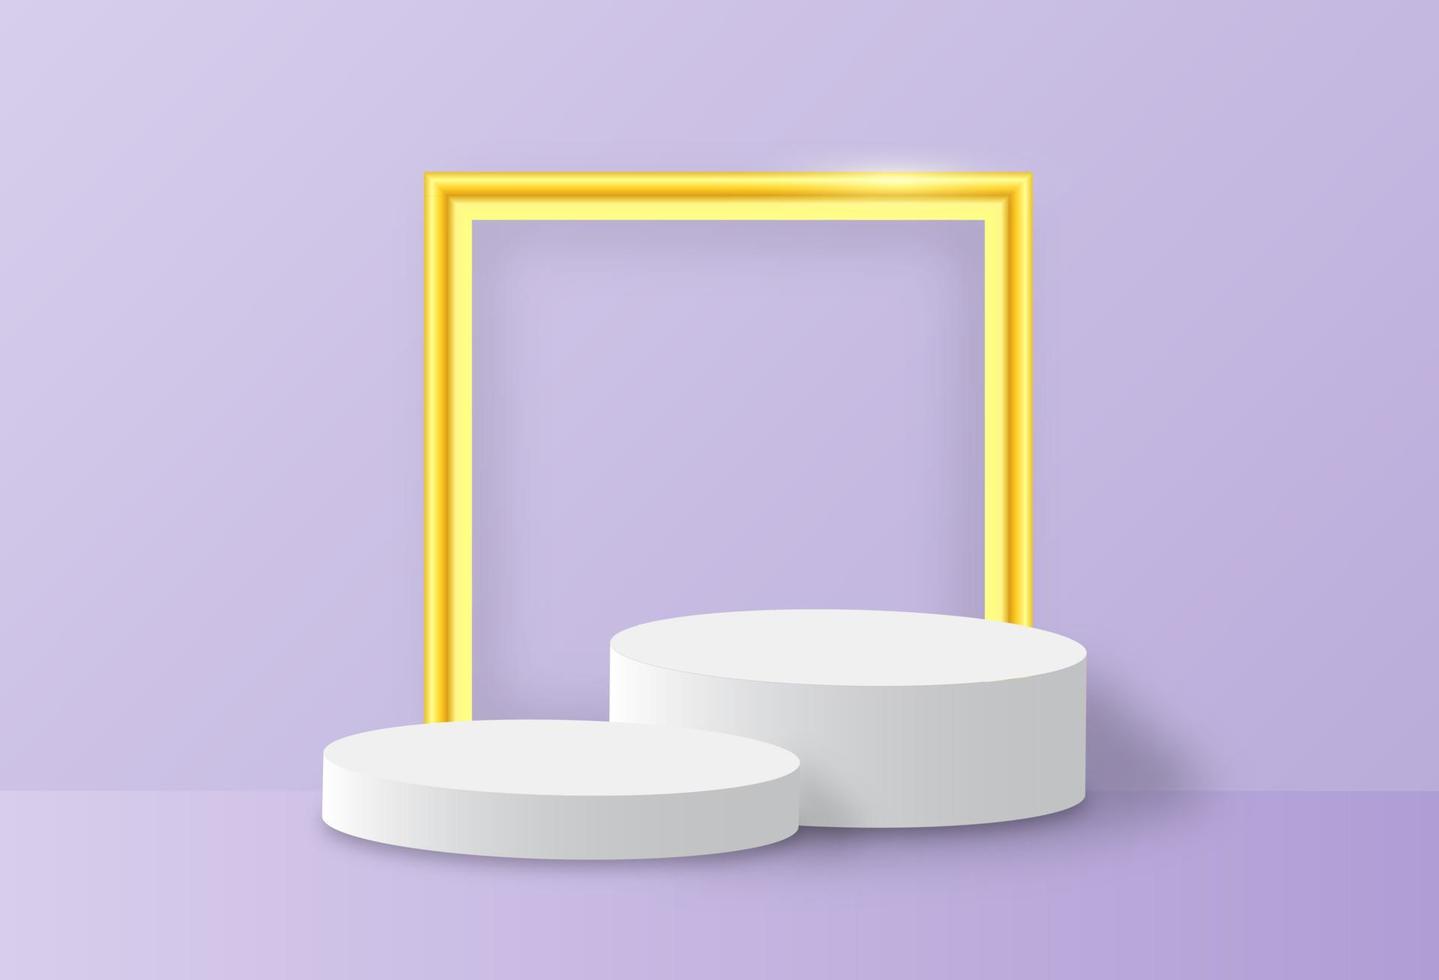 Geometric podium platform with golden frame. Commercial pedestal in purple pastel background. vector